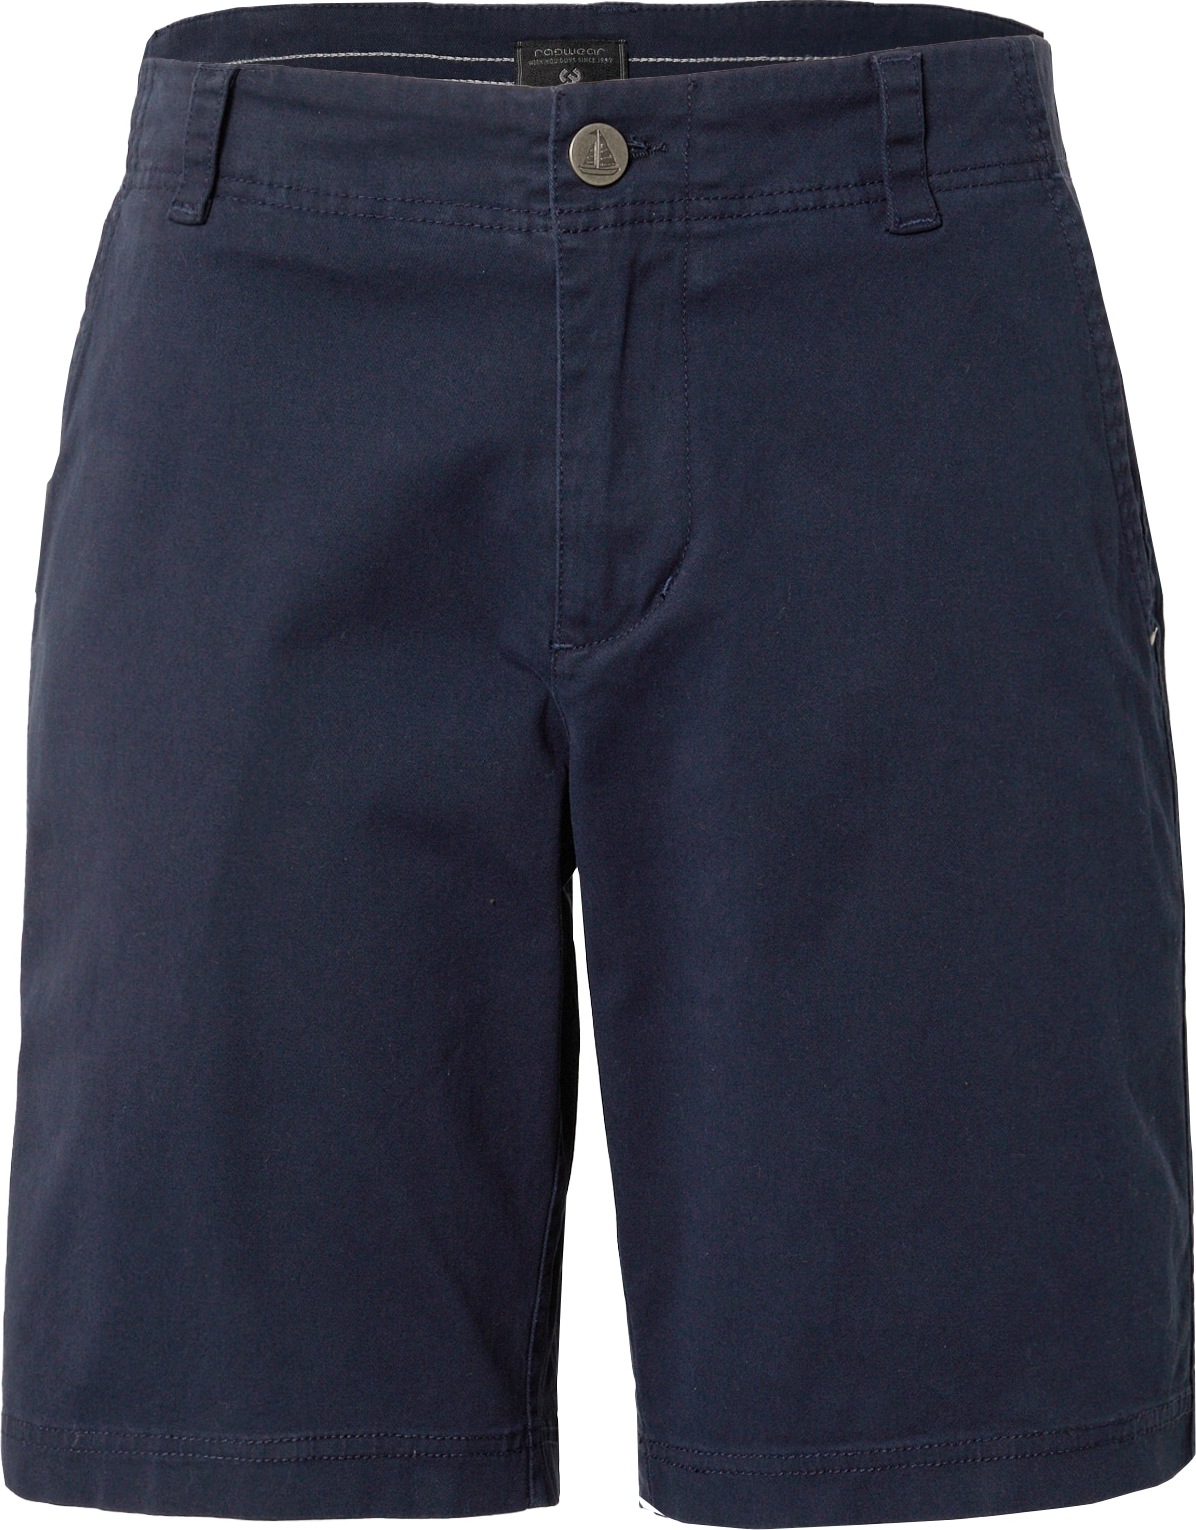 Chino kalhoty 'KAREL' Ragwear námořnická modř